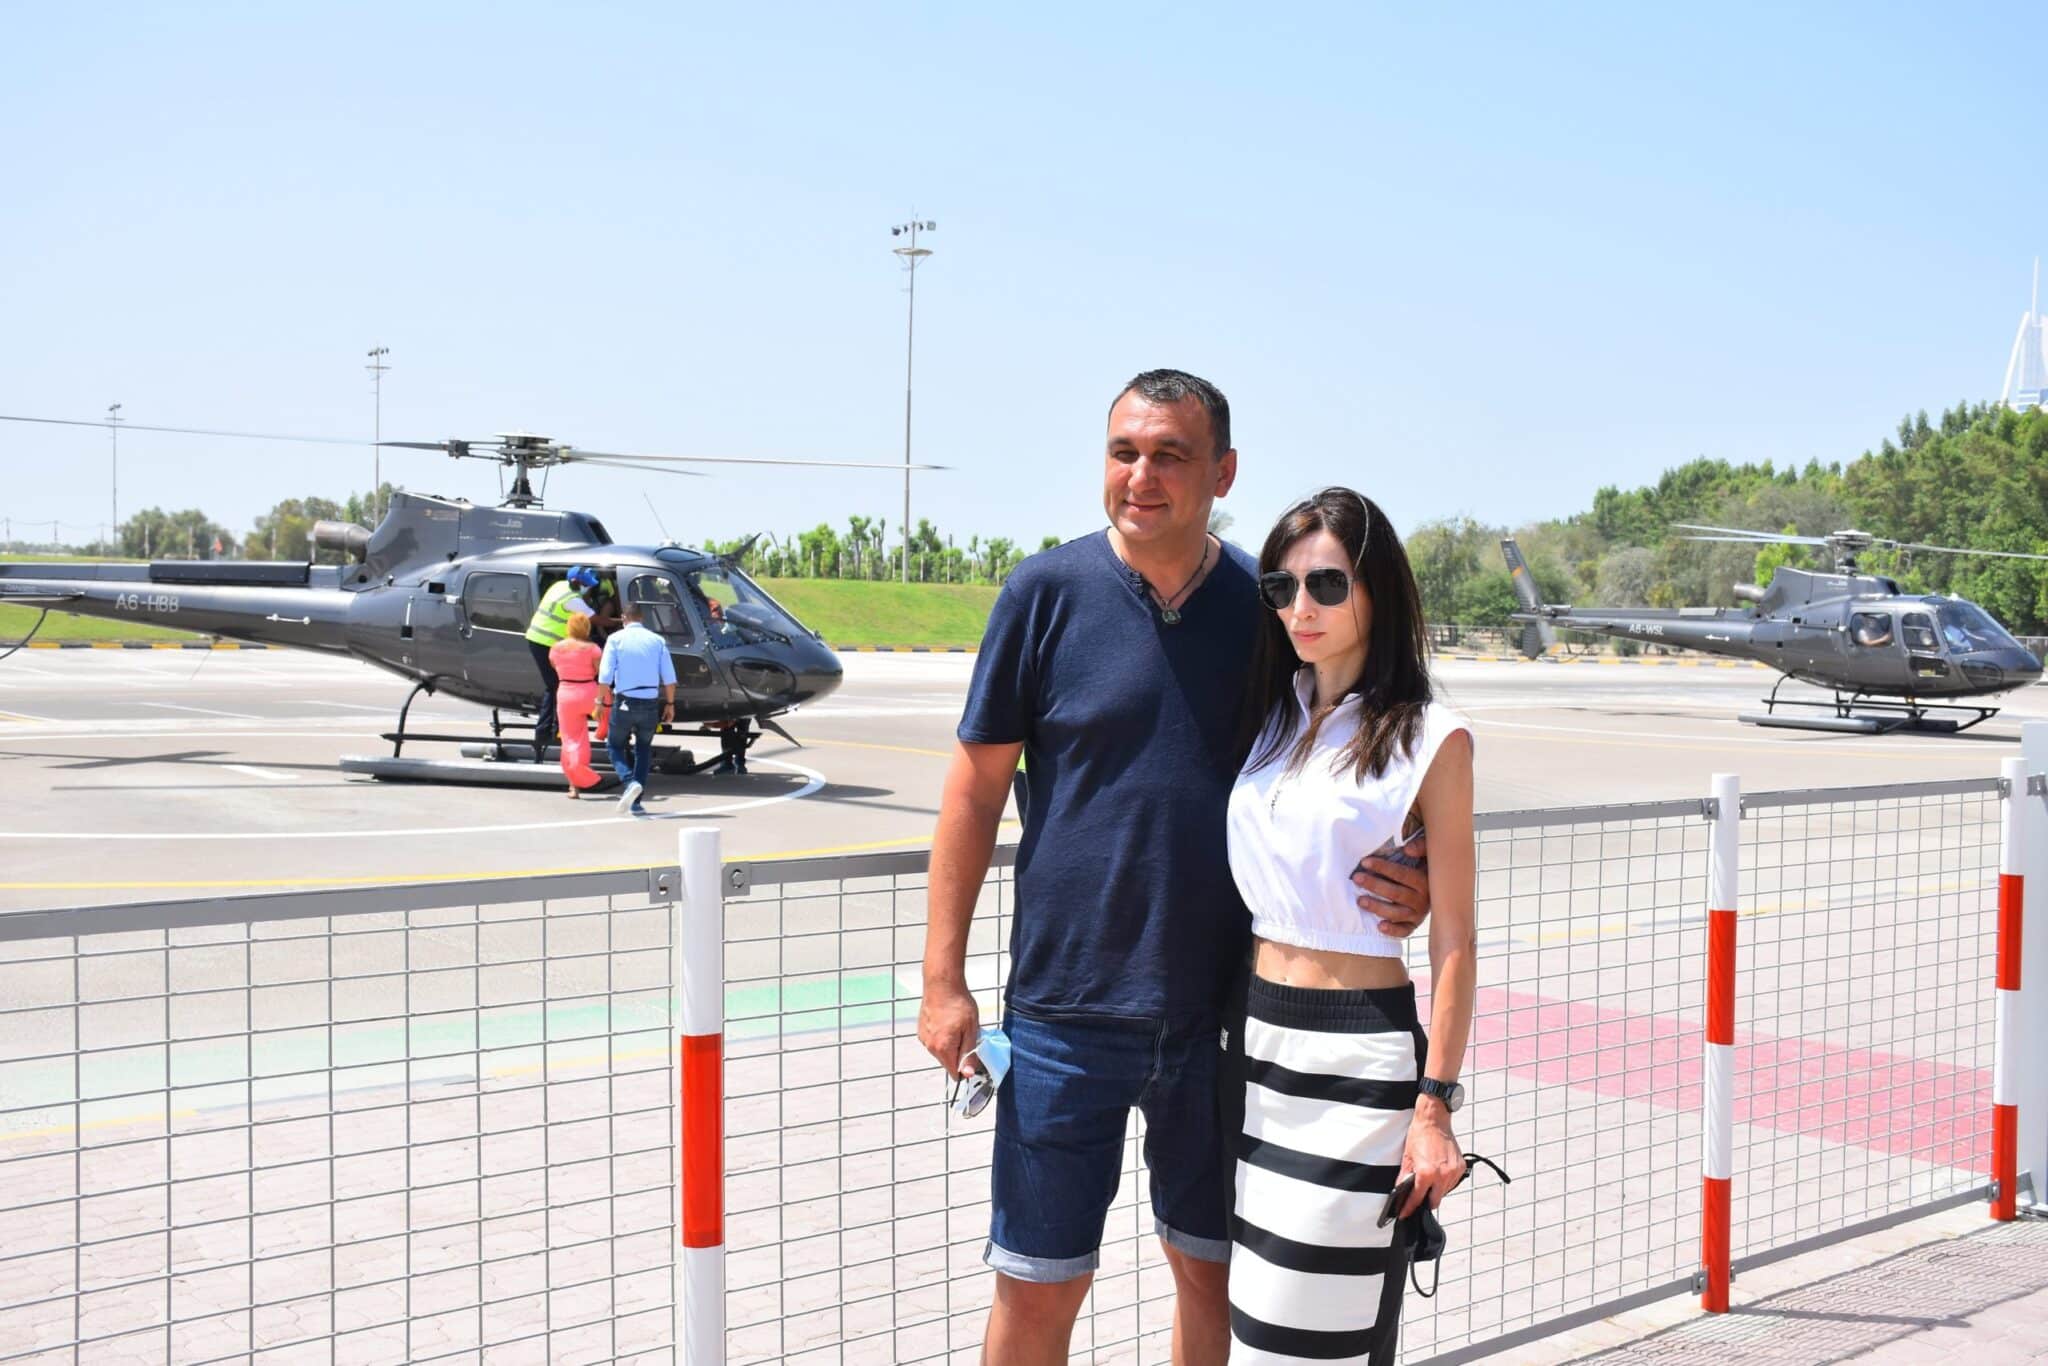 Helidubai | Helicopter tour | Helicopter tour Dubai | Helicopter tour in Dubai | Helicopter Ride Dubai | Helicopter Ride in UAE | Dubai Helicopter Tour | Helicopter tour Over Dubai | helicopter rides dubai